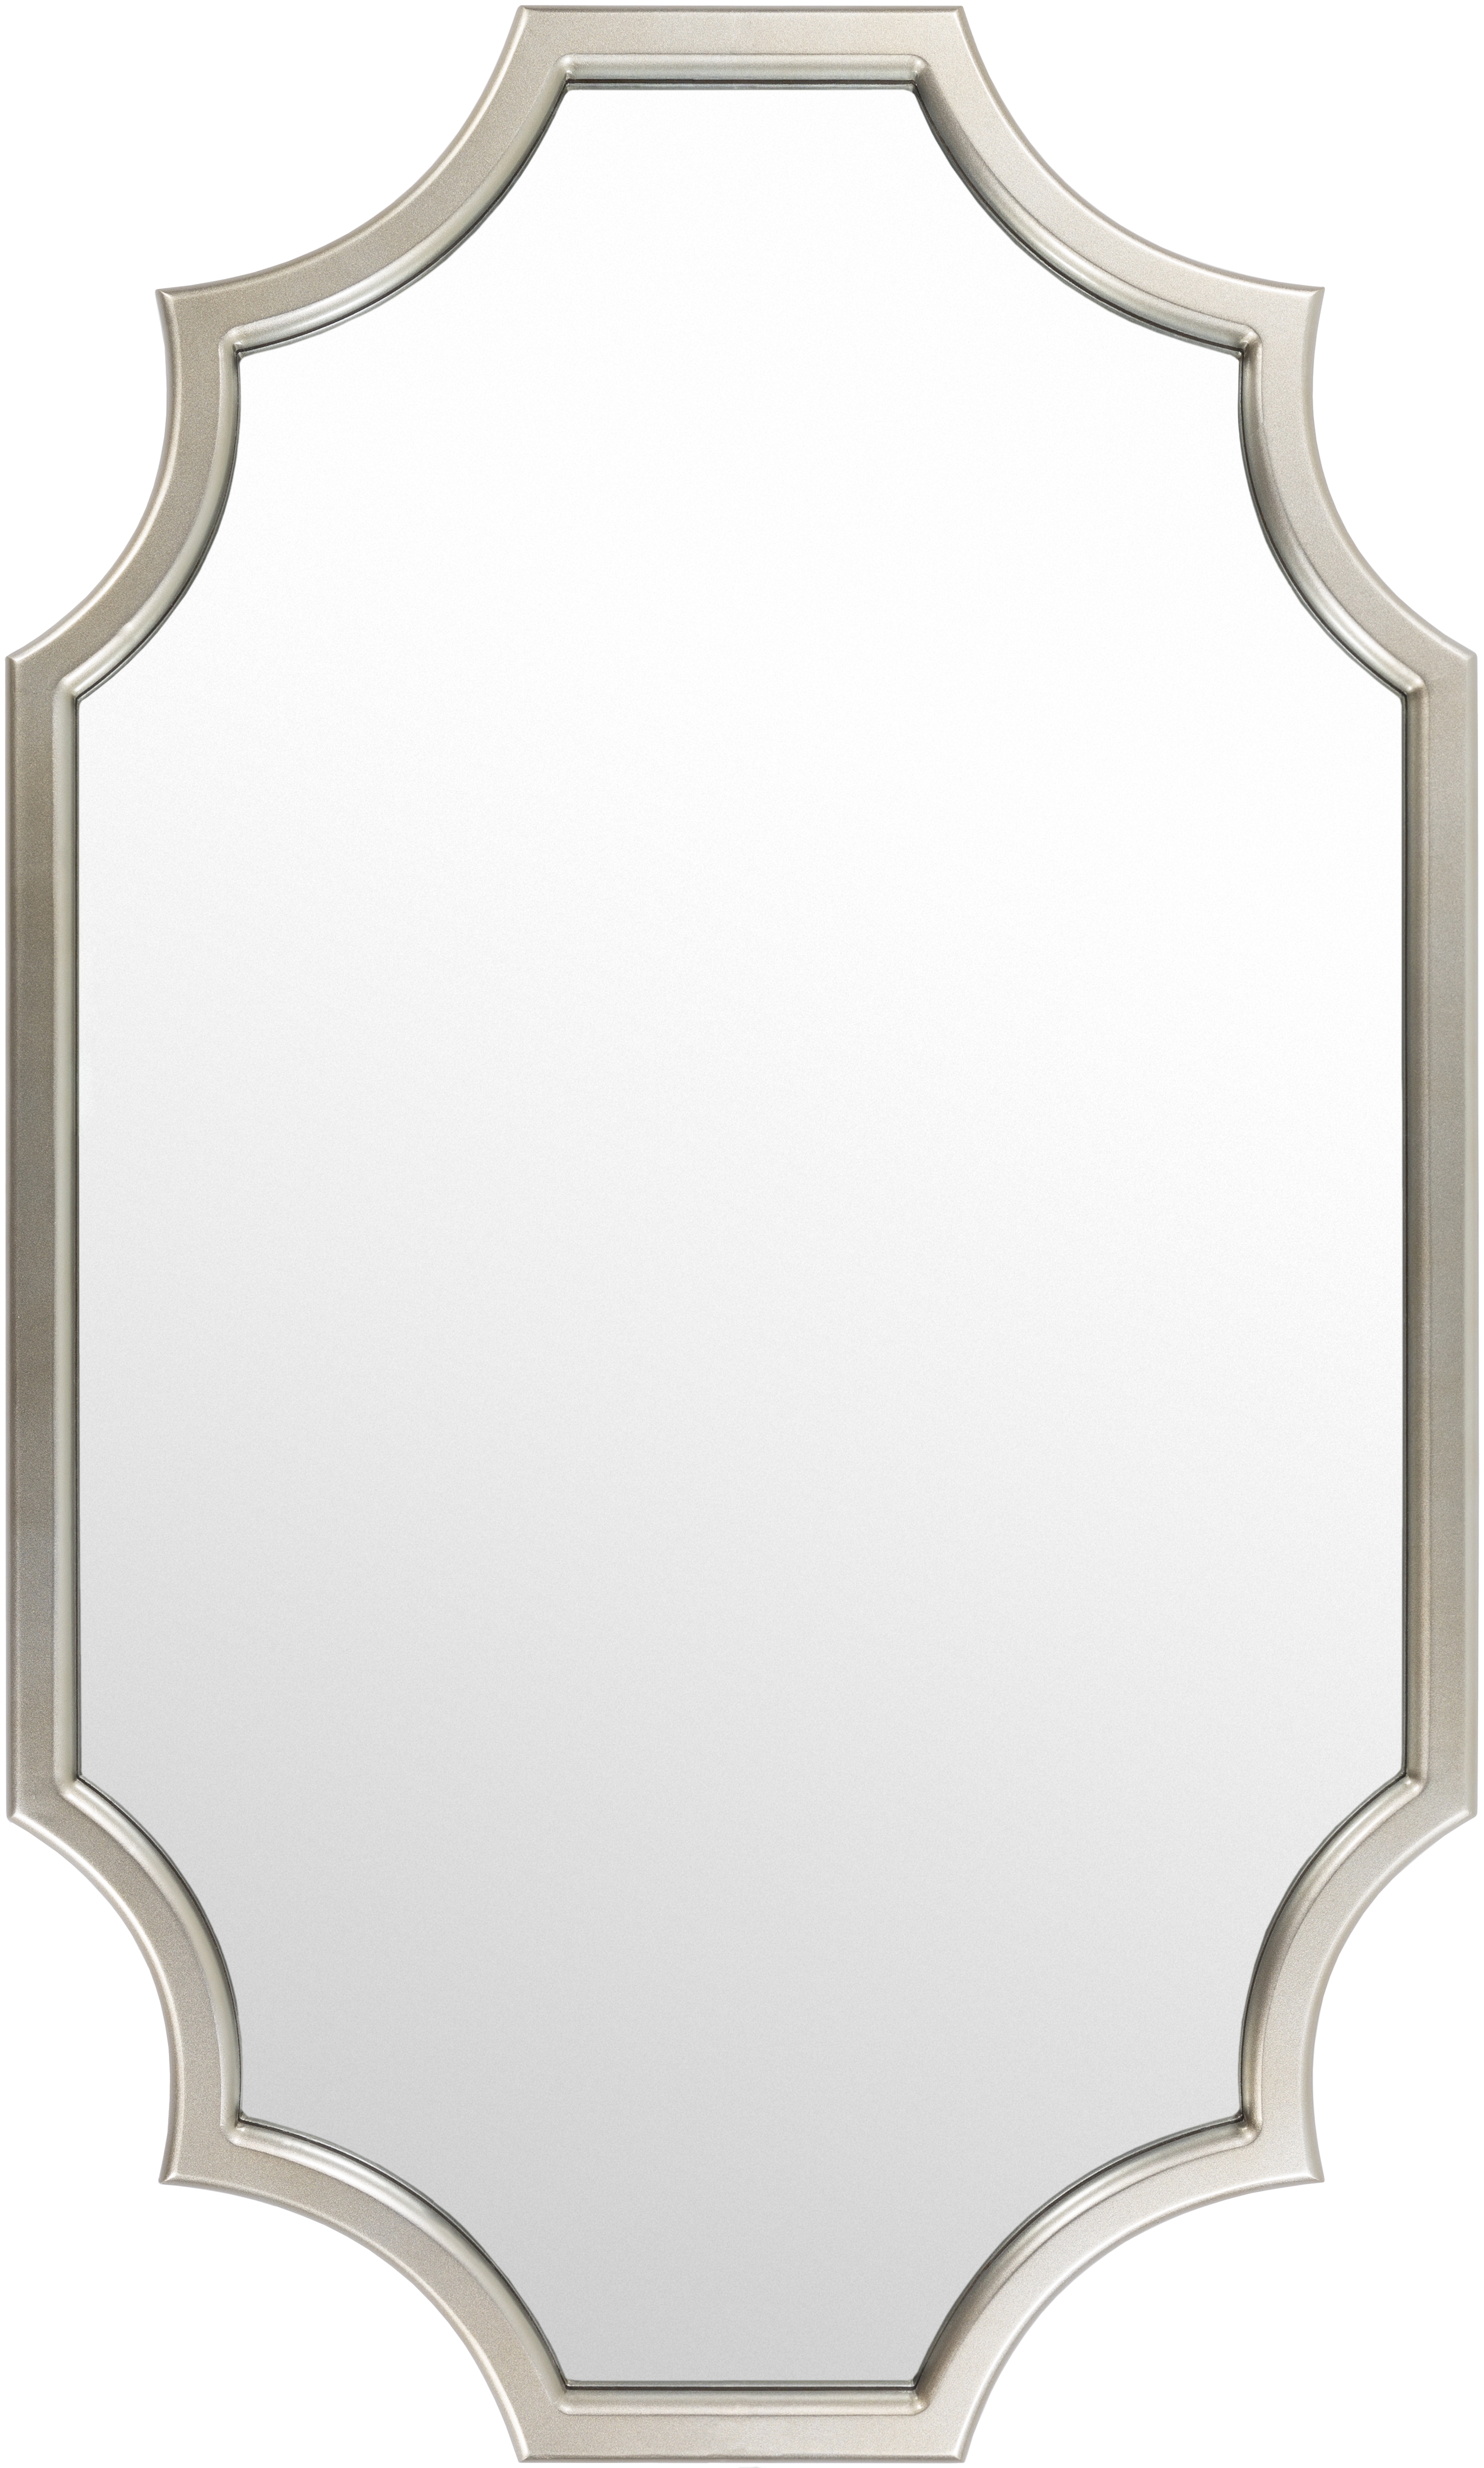 Imanol Mirror, 50"H x 30"W - Image 0